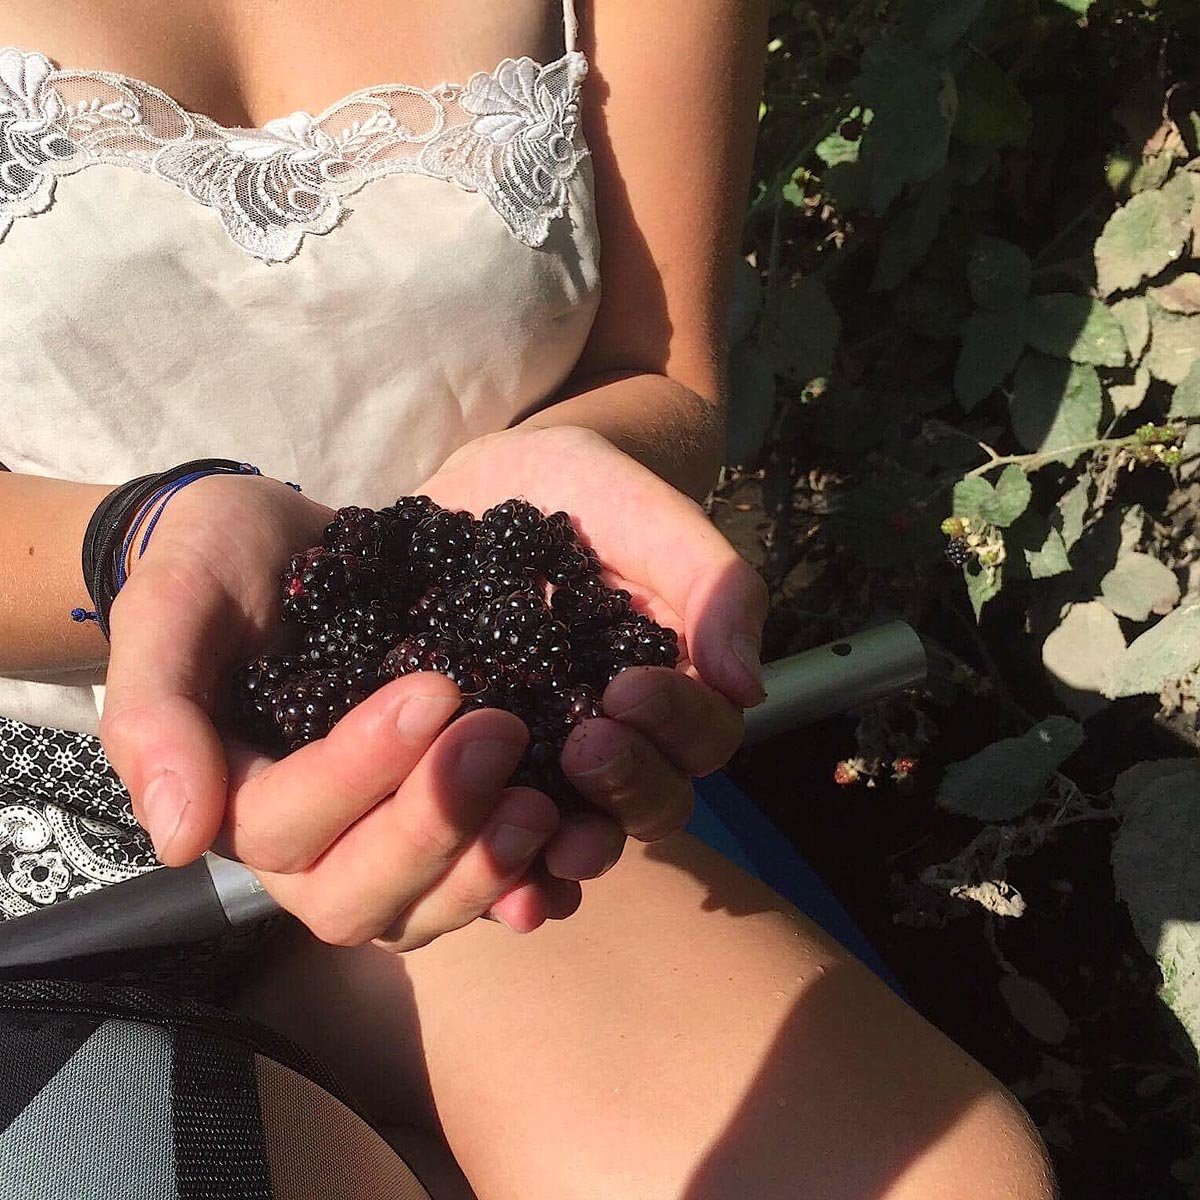 A handful of berries